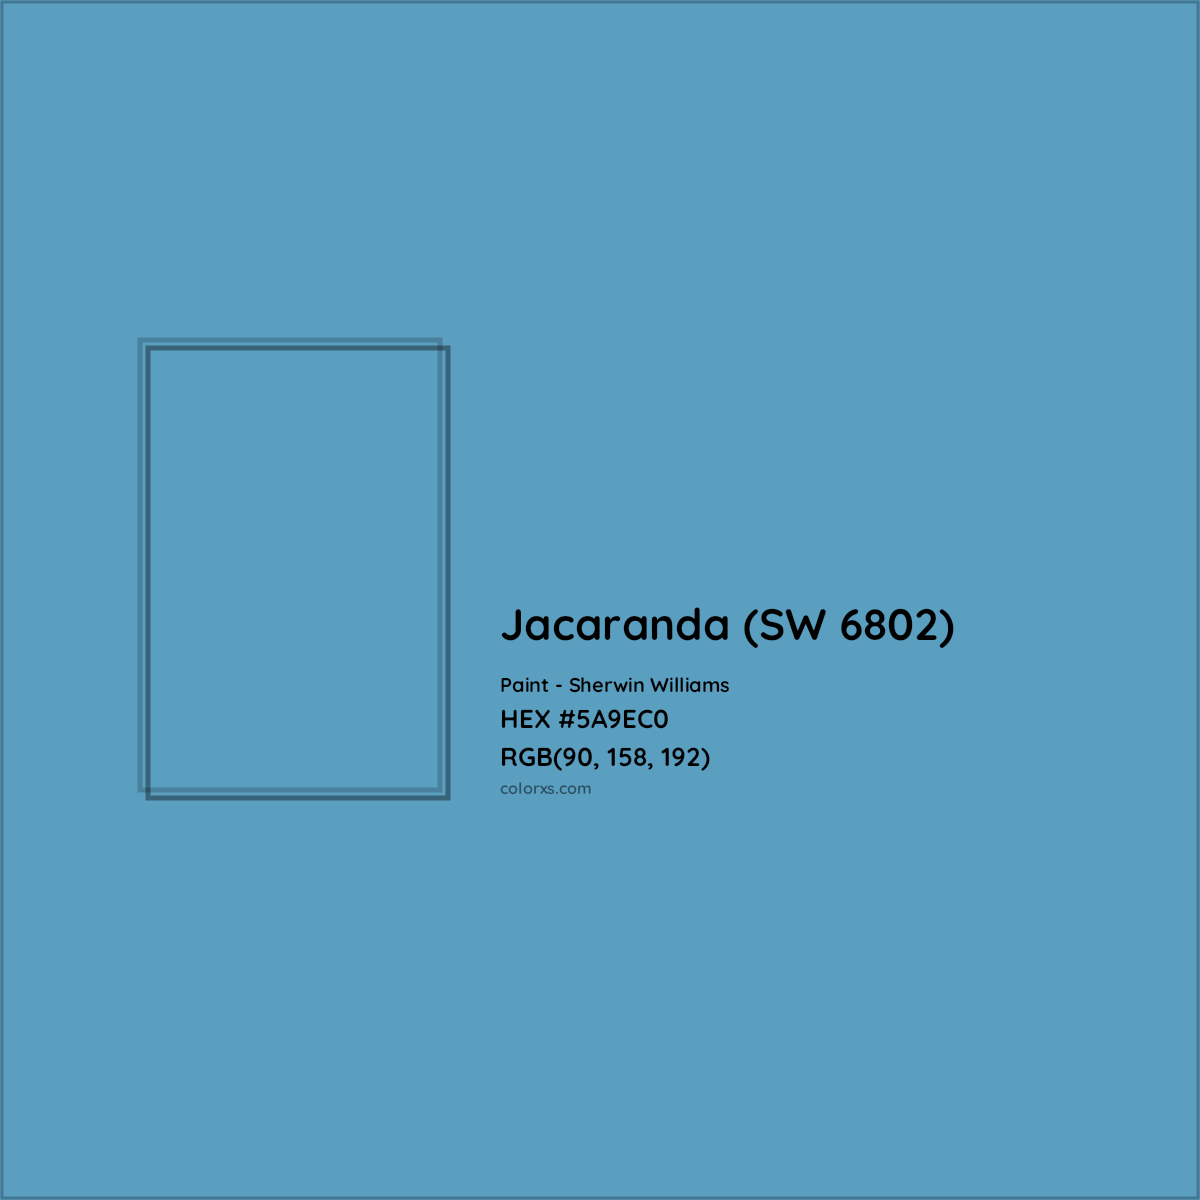 HEX #5A9EC0 Jacaranda (SW 6802) Paint Sherwin Williams - Color Code